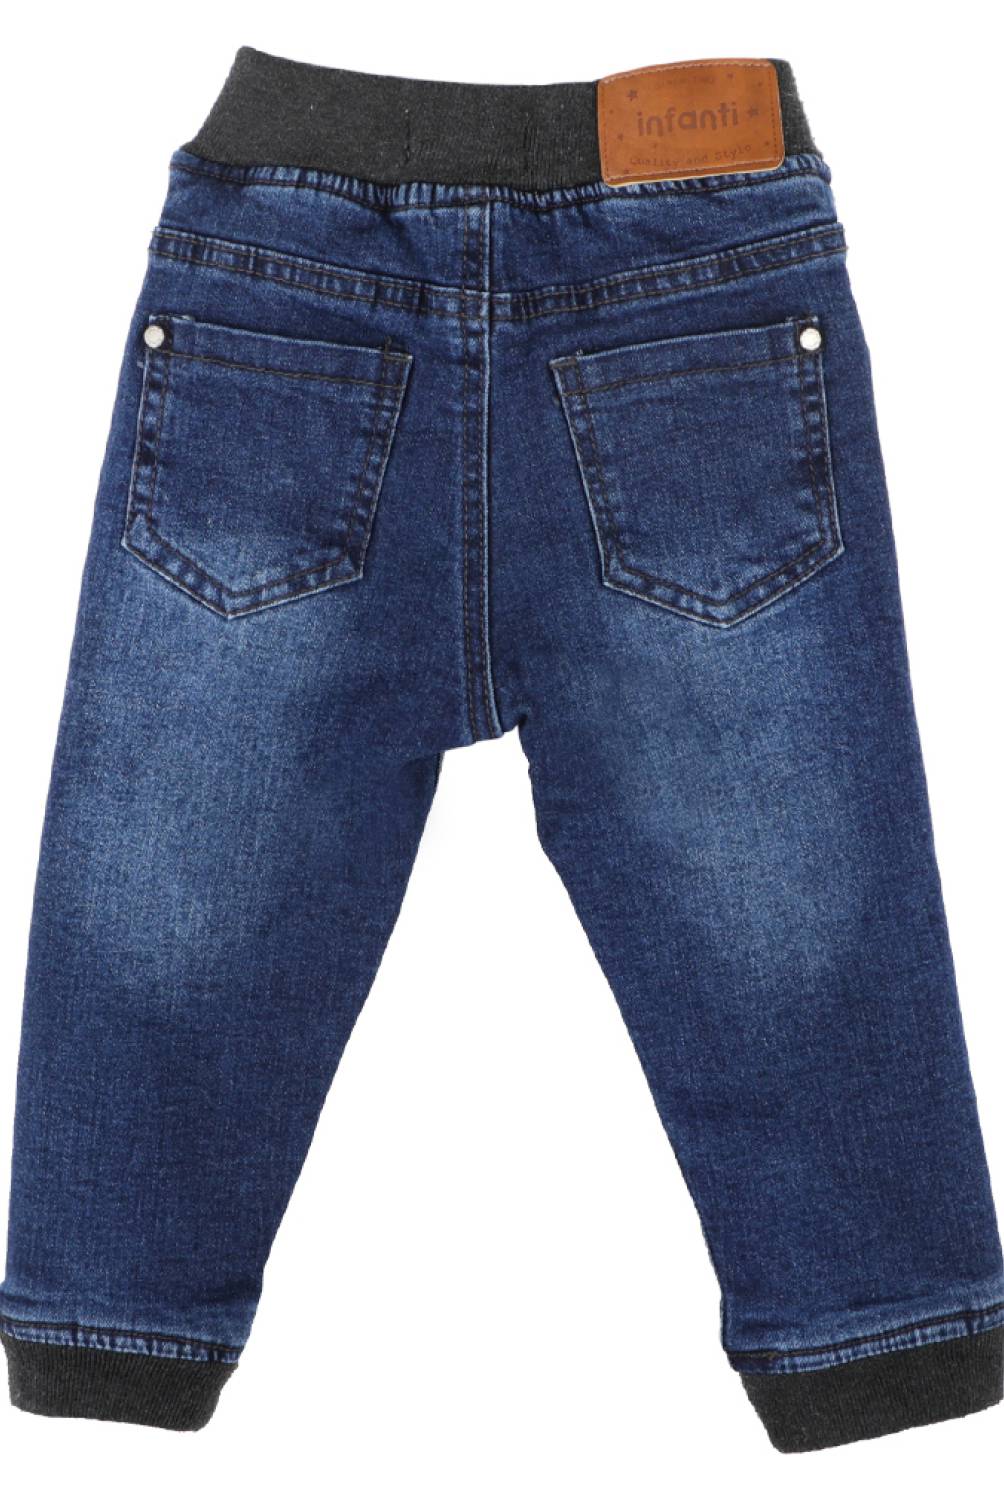 Infanti - Infanti Jeans Con Forro Polar Unisex